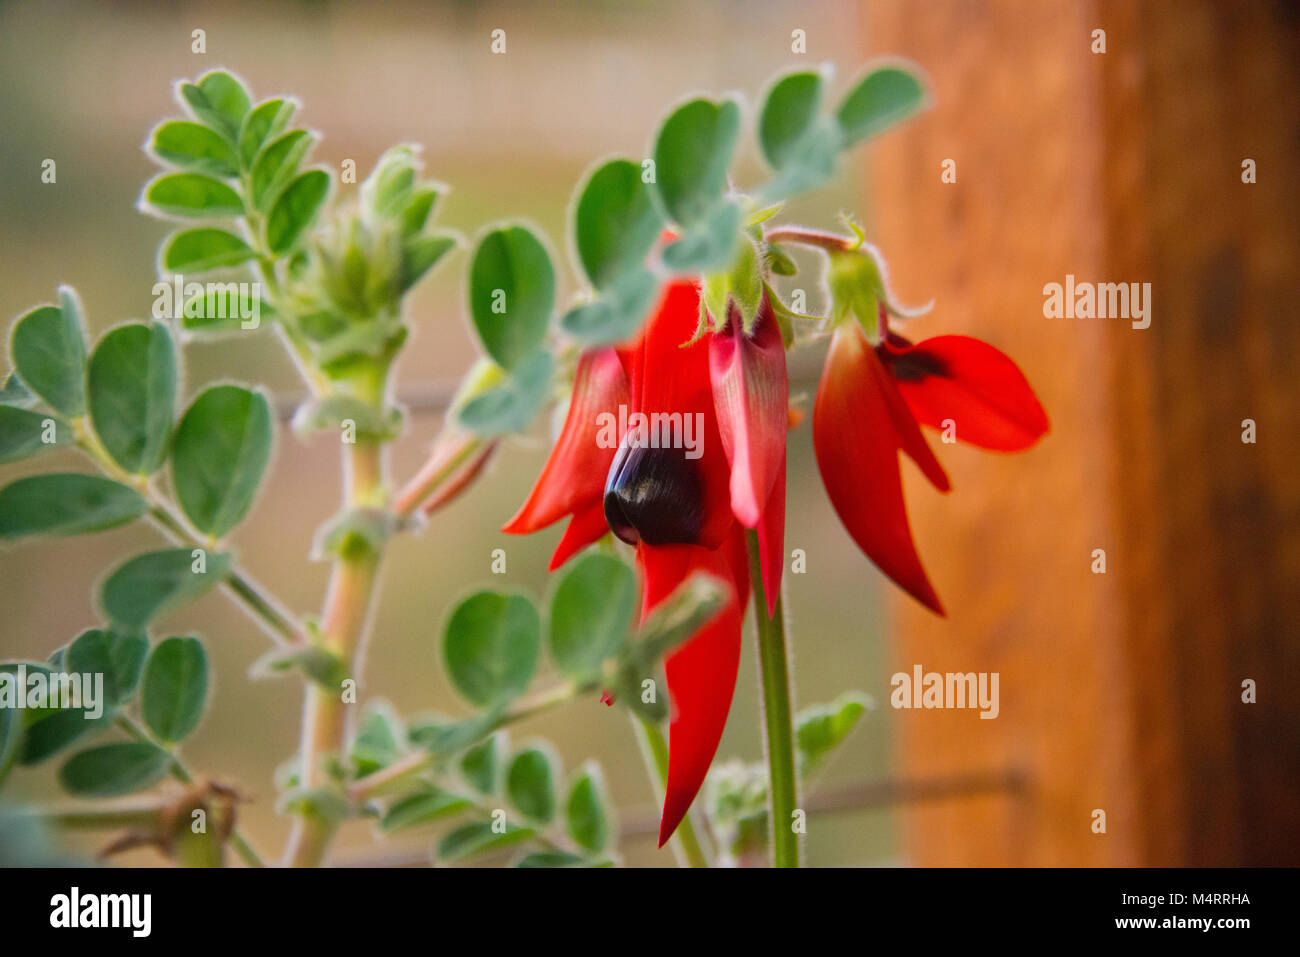 Potted Sturt's Desert Pea: Floral emblem of South Australia Stock Photo